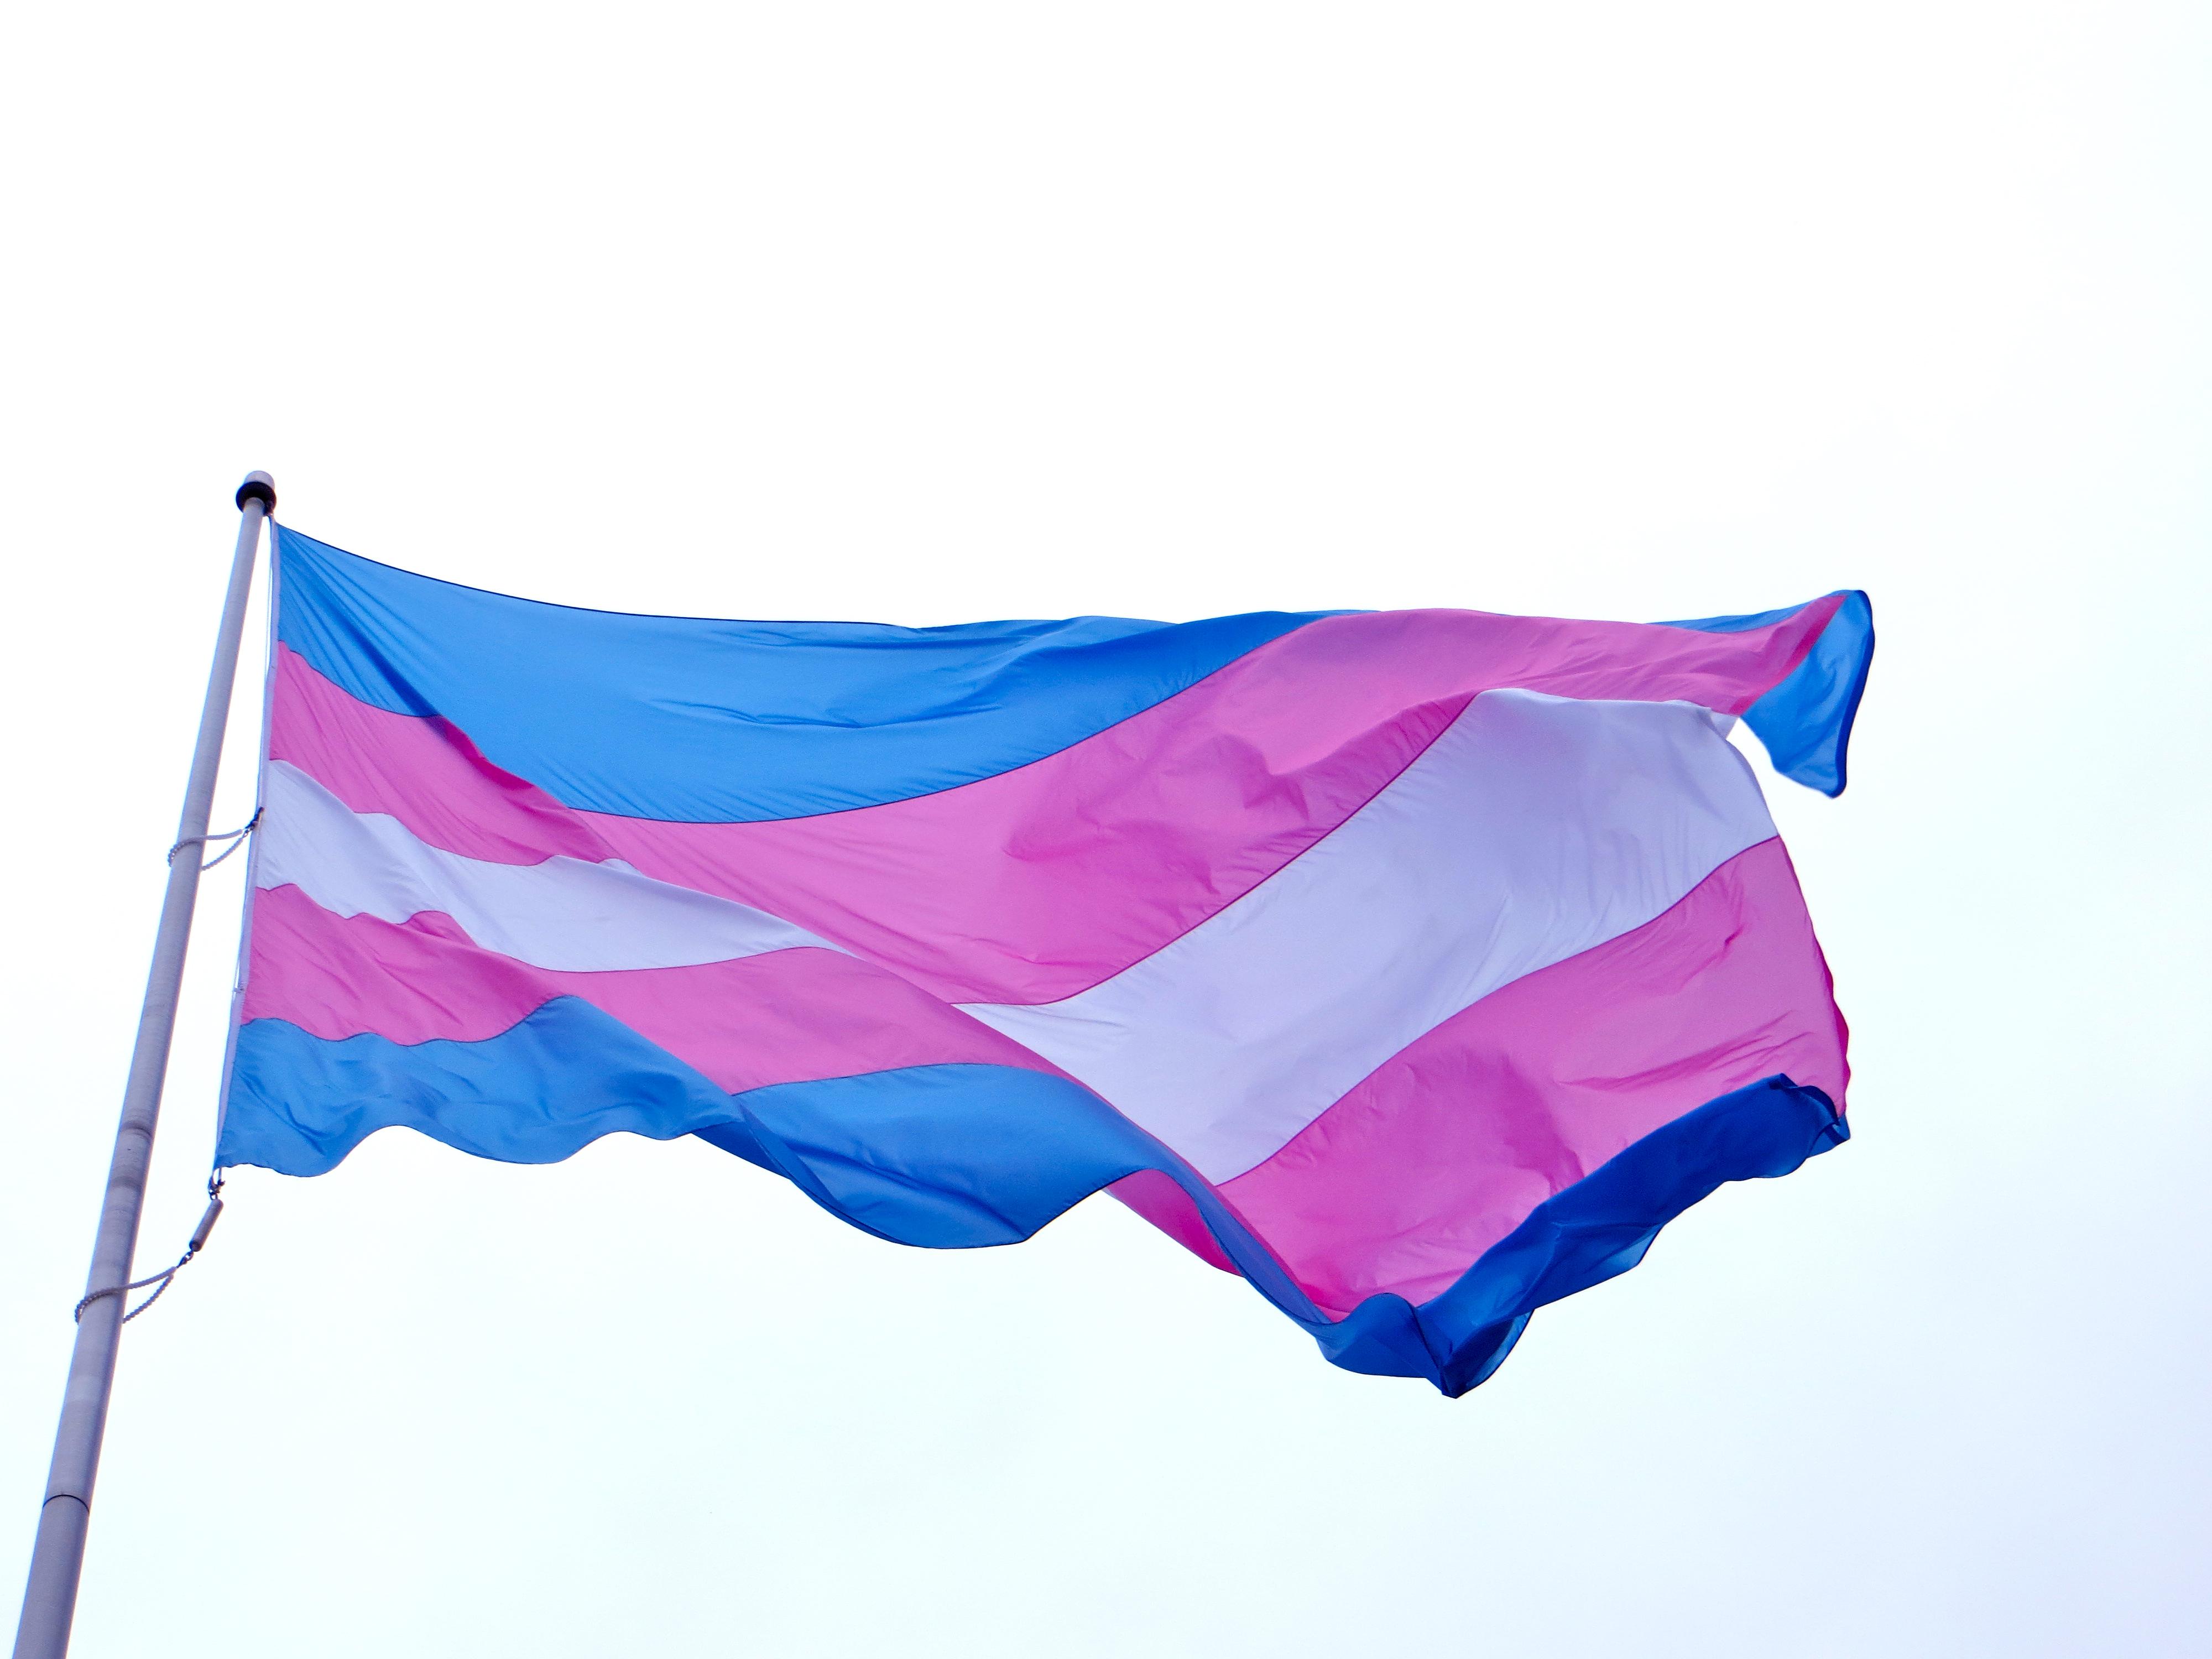 Blue, pink and white transgender flag flying